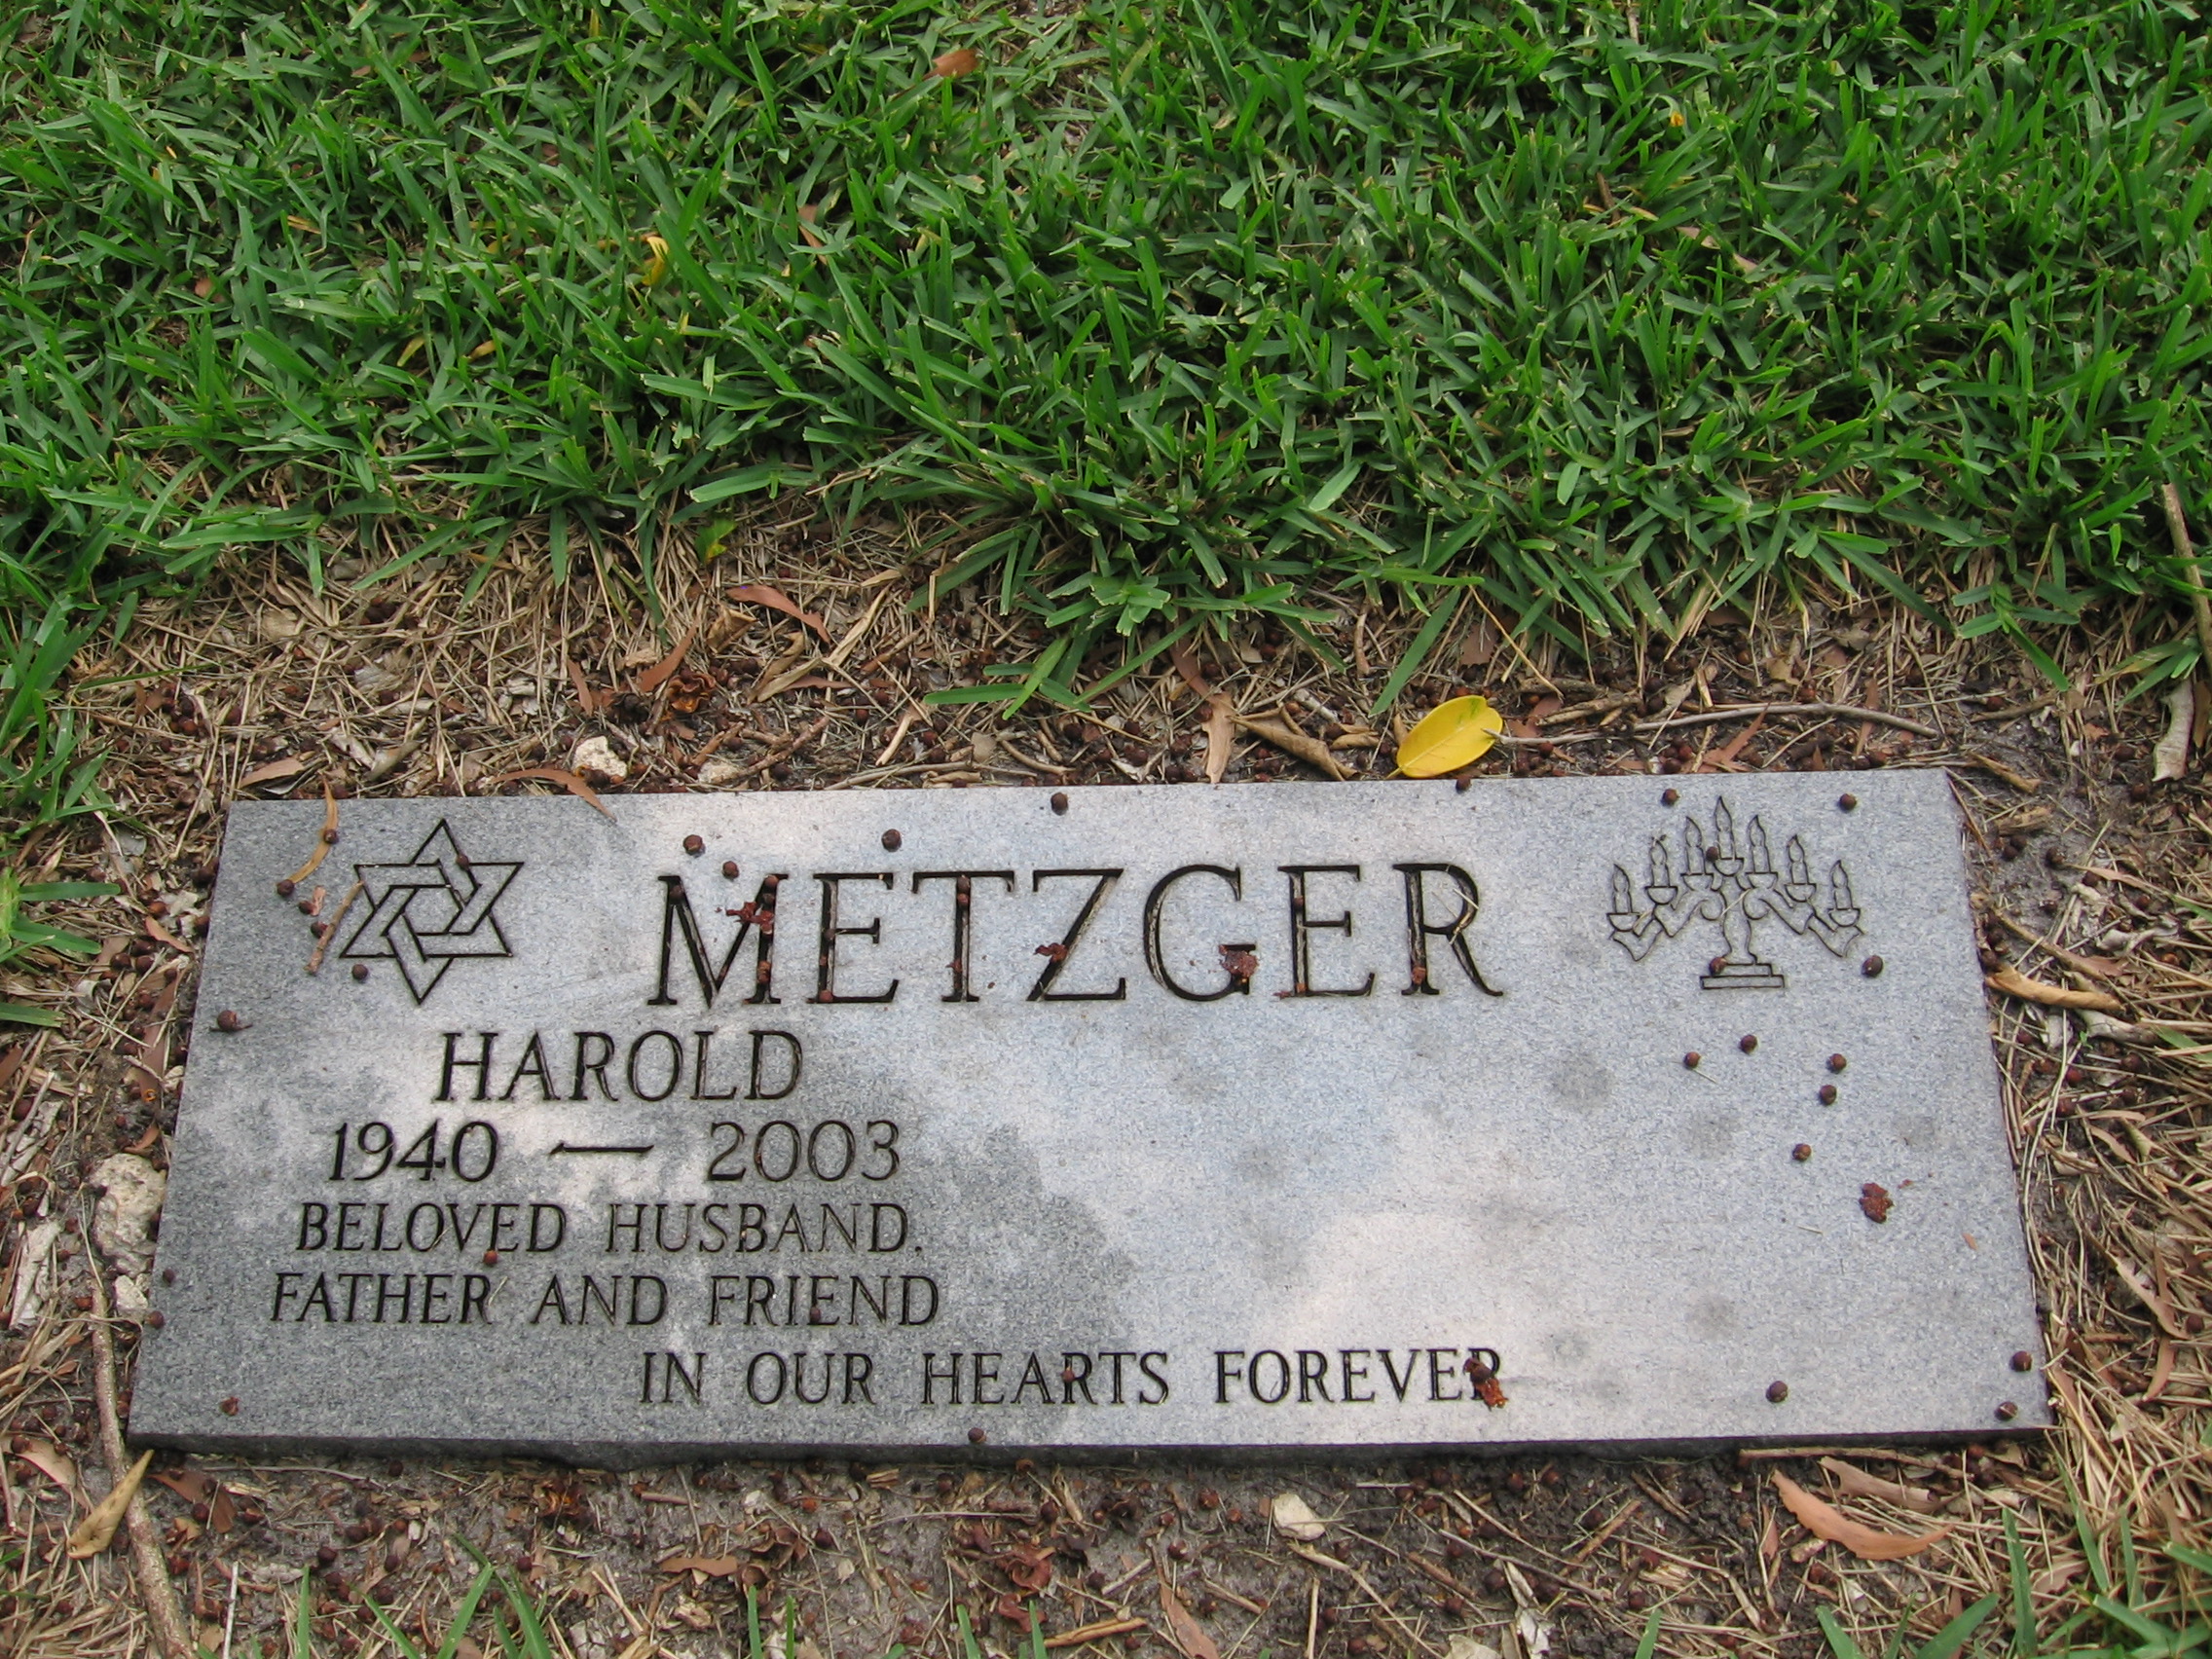 Harold Metzger